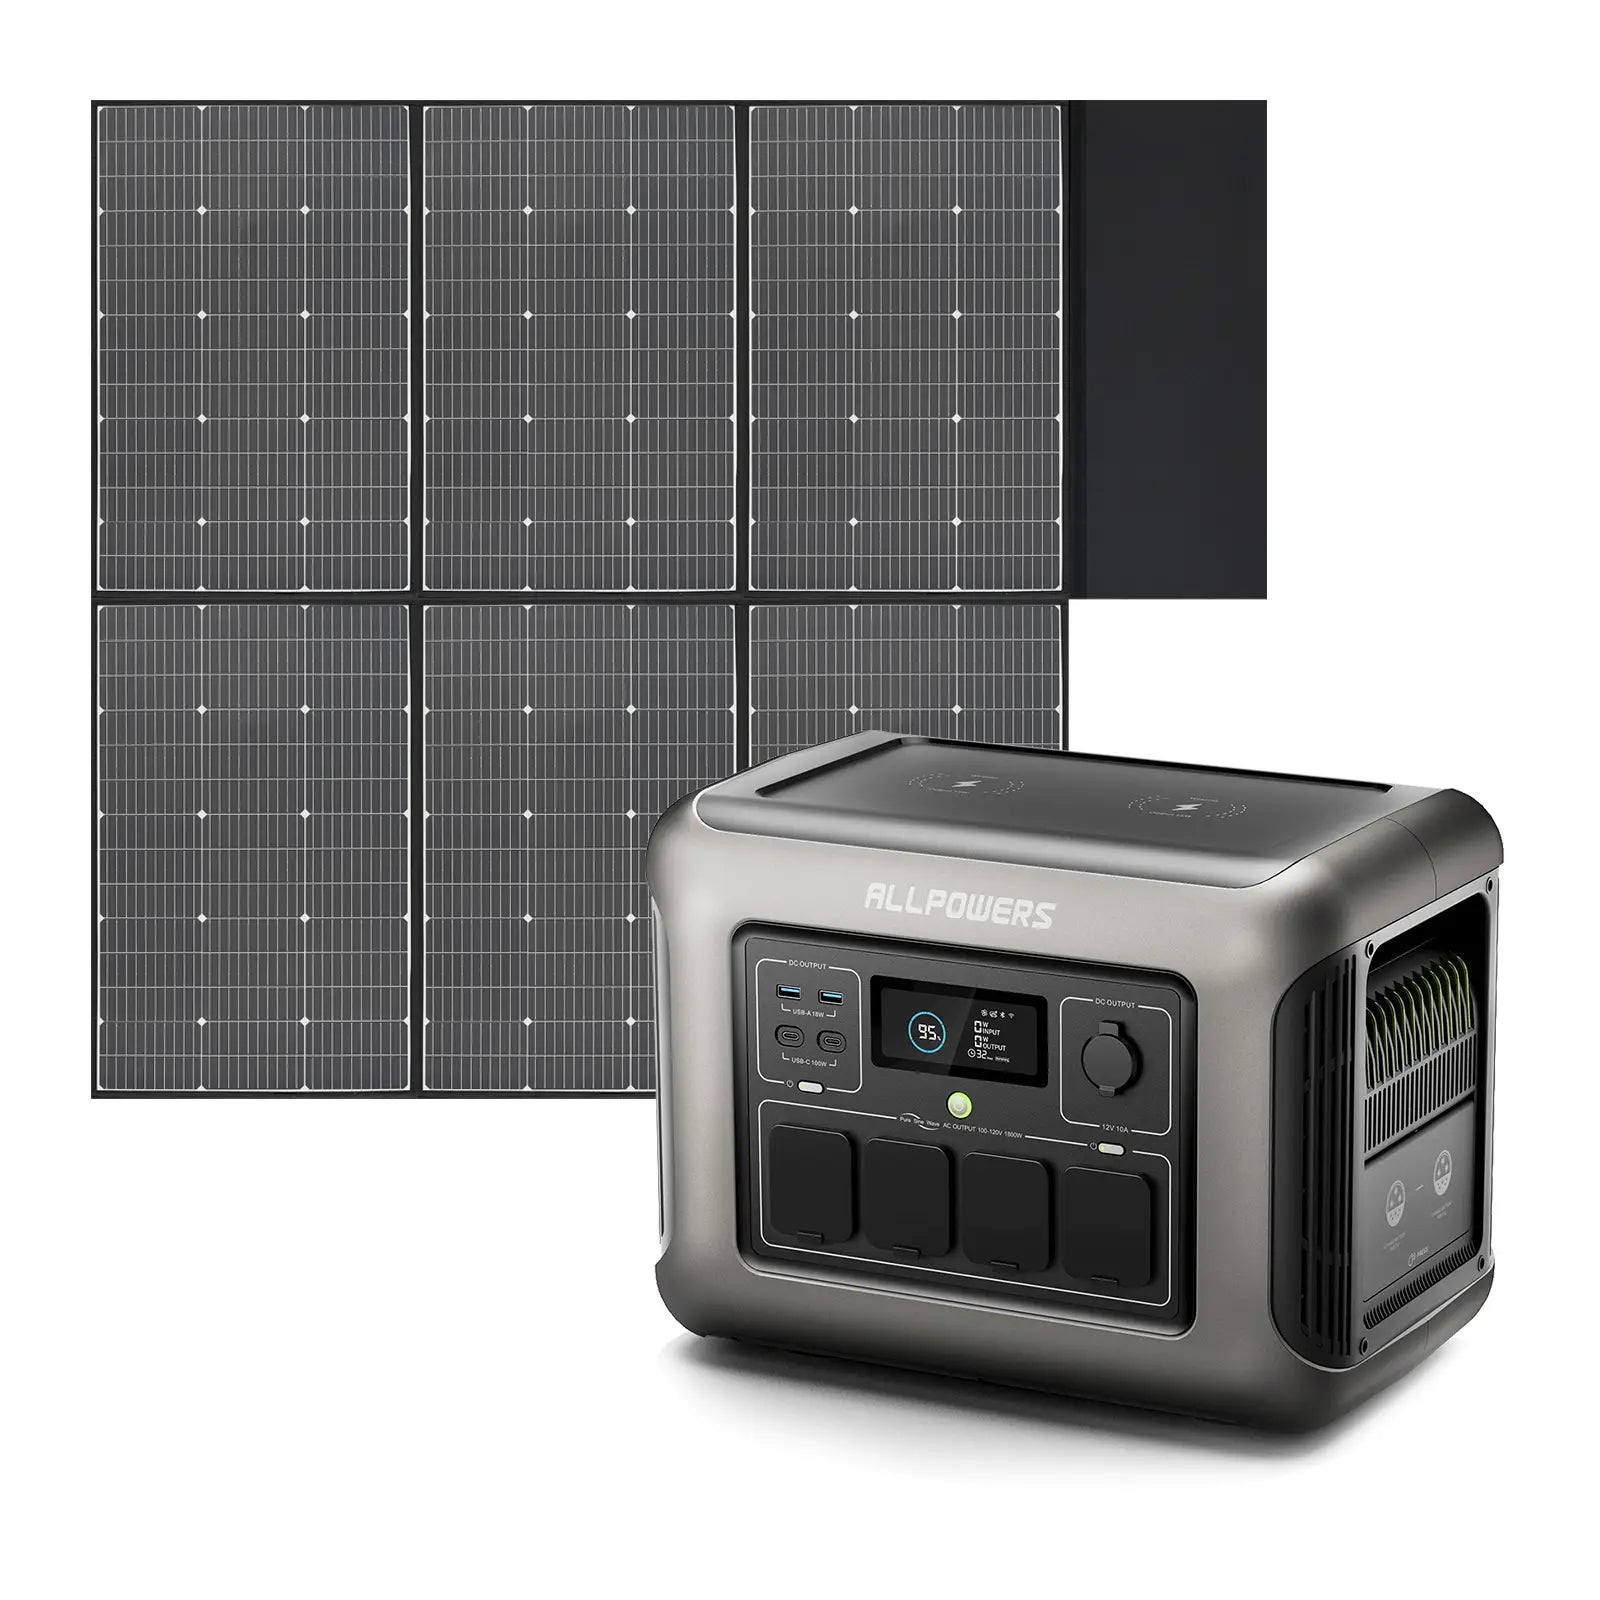 ALLPOWERS Generador Solar 1800W (R1500 + SP039 Panel Solar 600W )